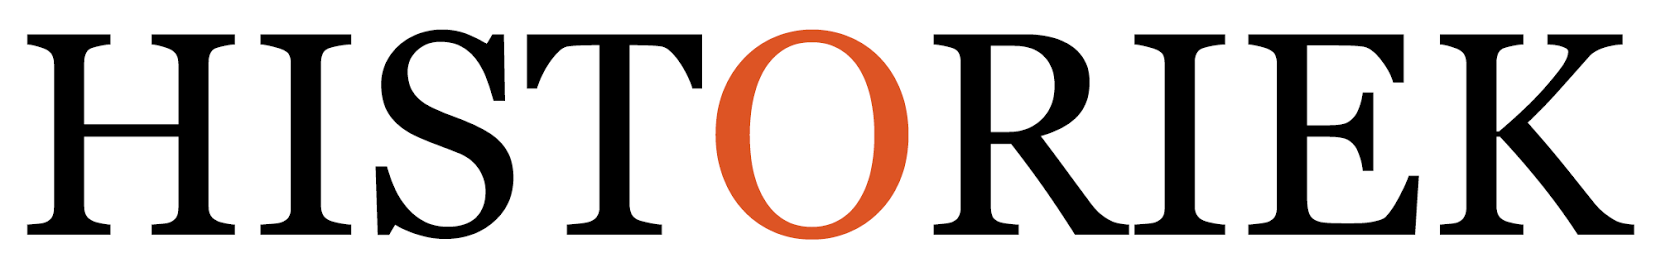 Historiek-logo